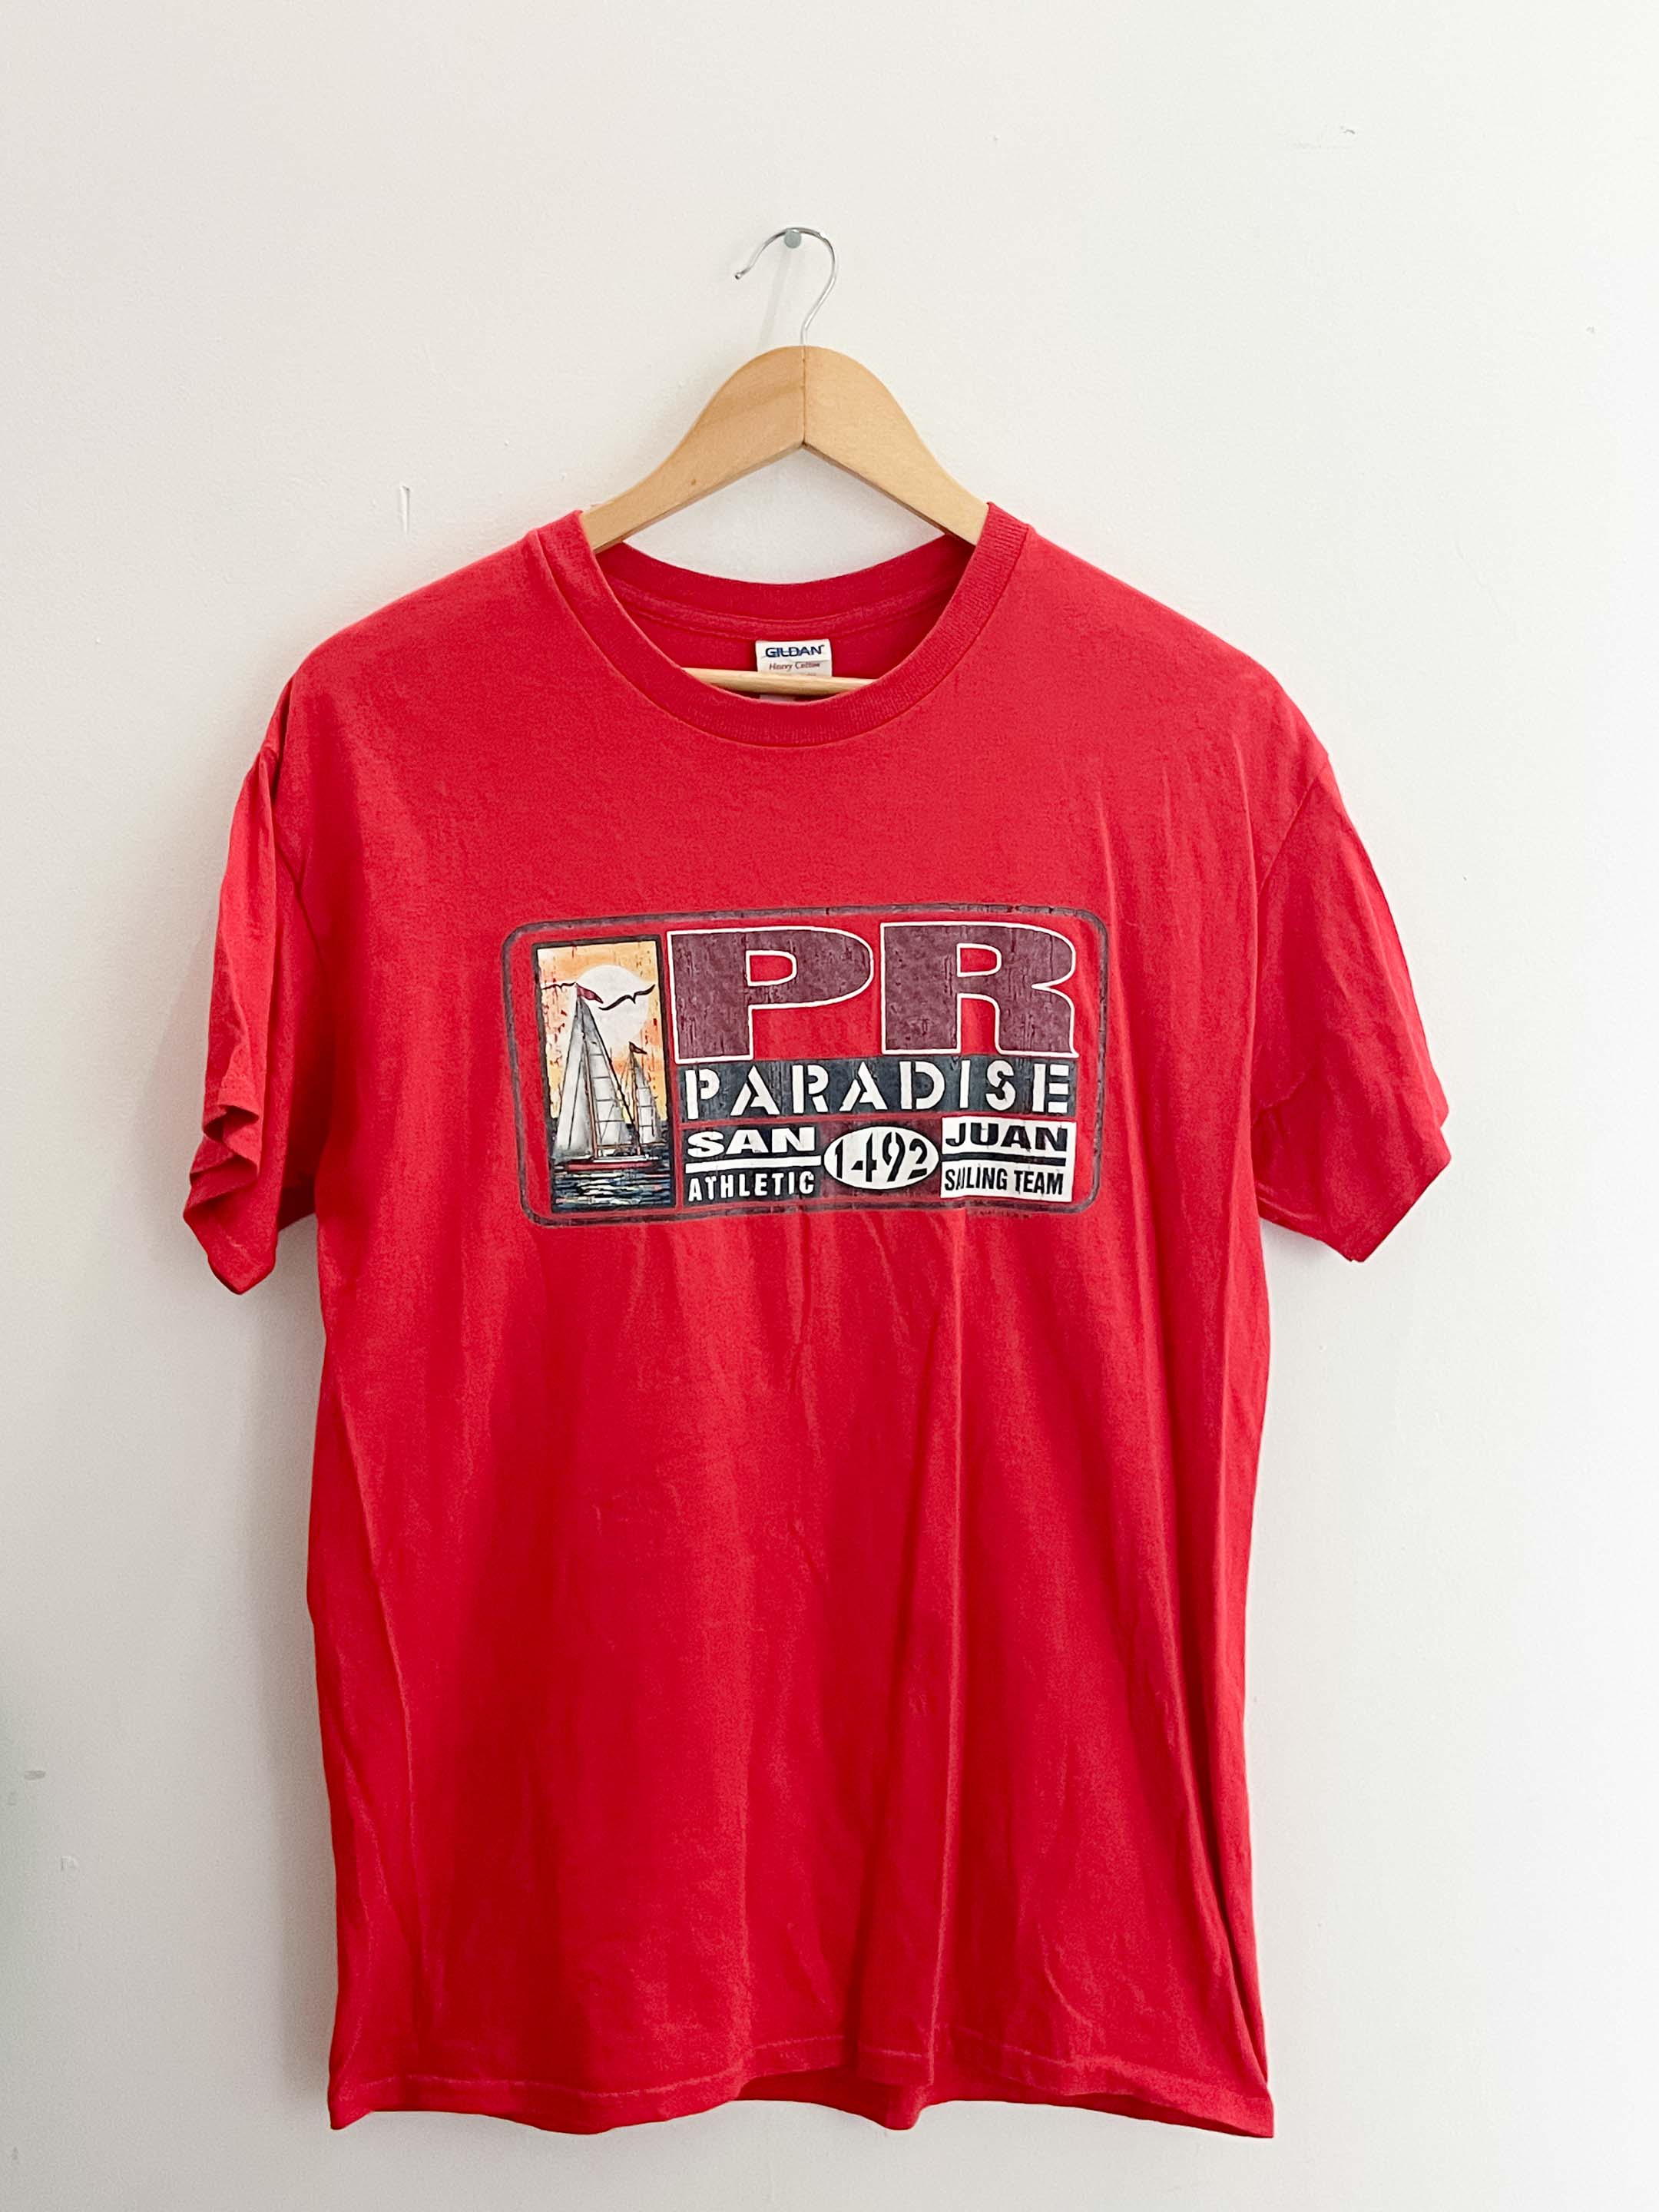 Vintage Gildan paradise graphics red mens tshirt size S